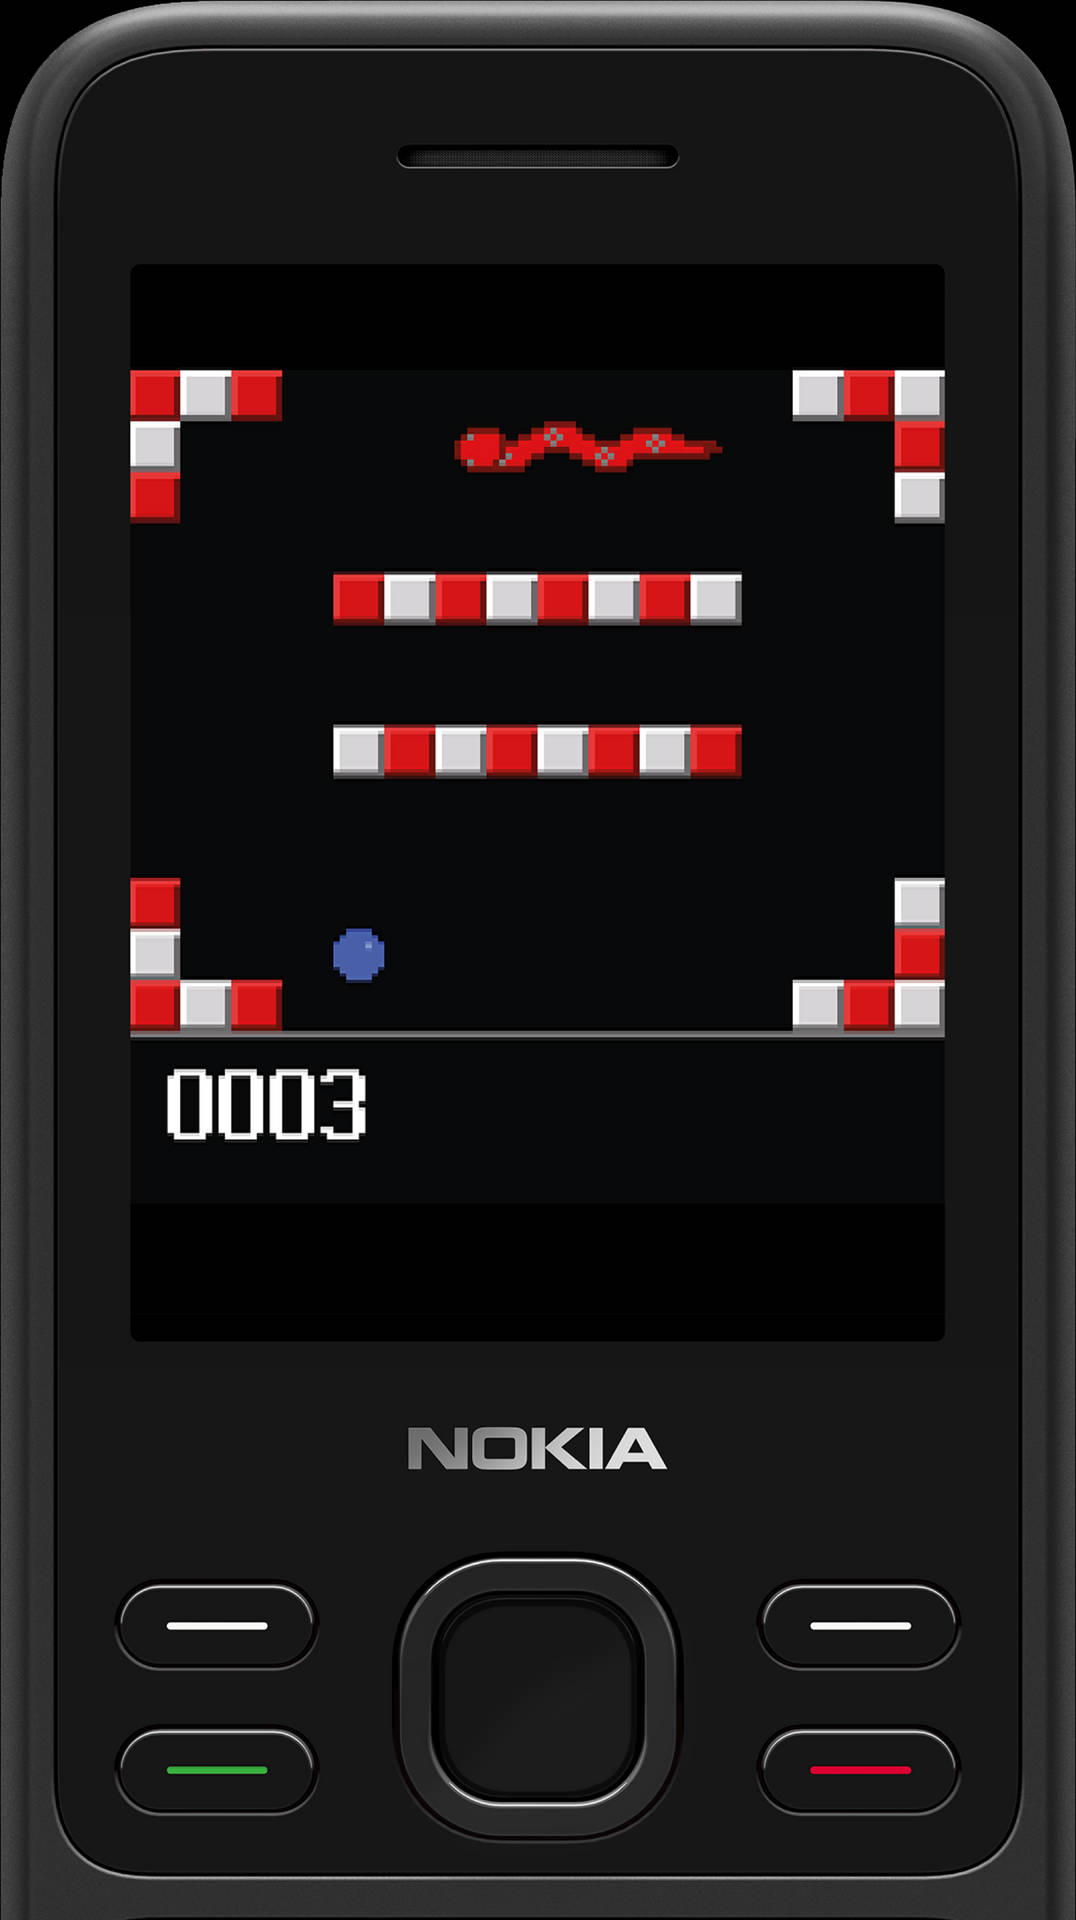 Snake Game On Nokia Phone Wallpaper